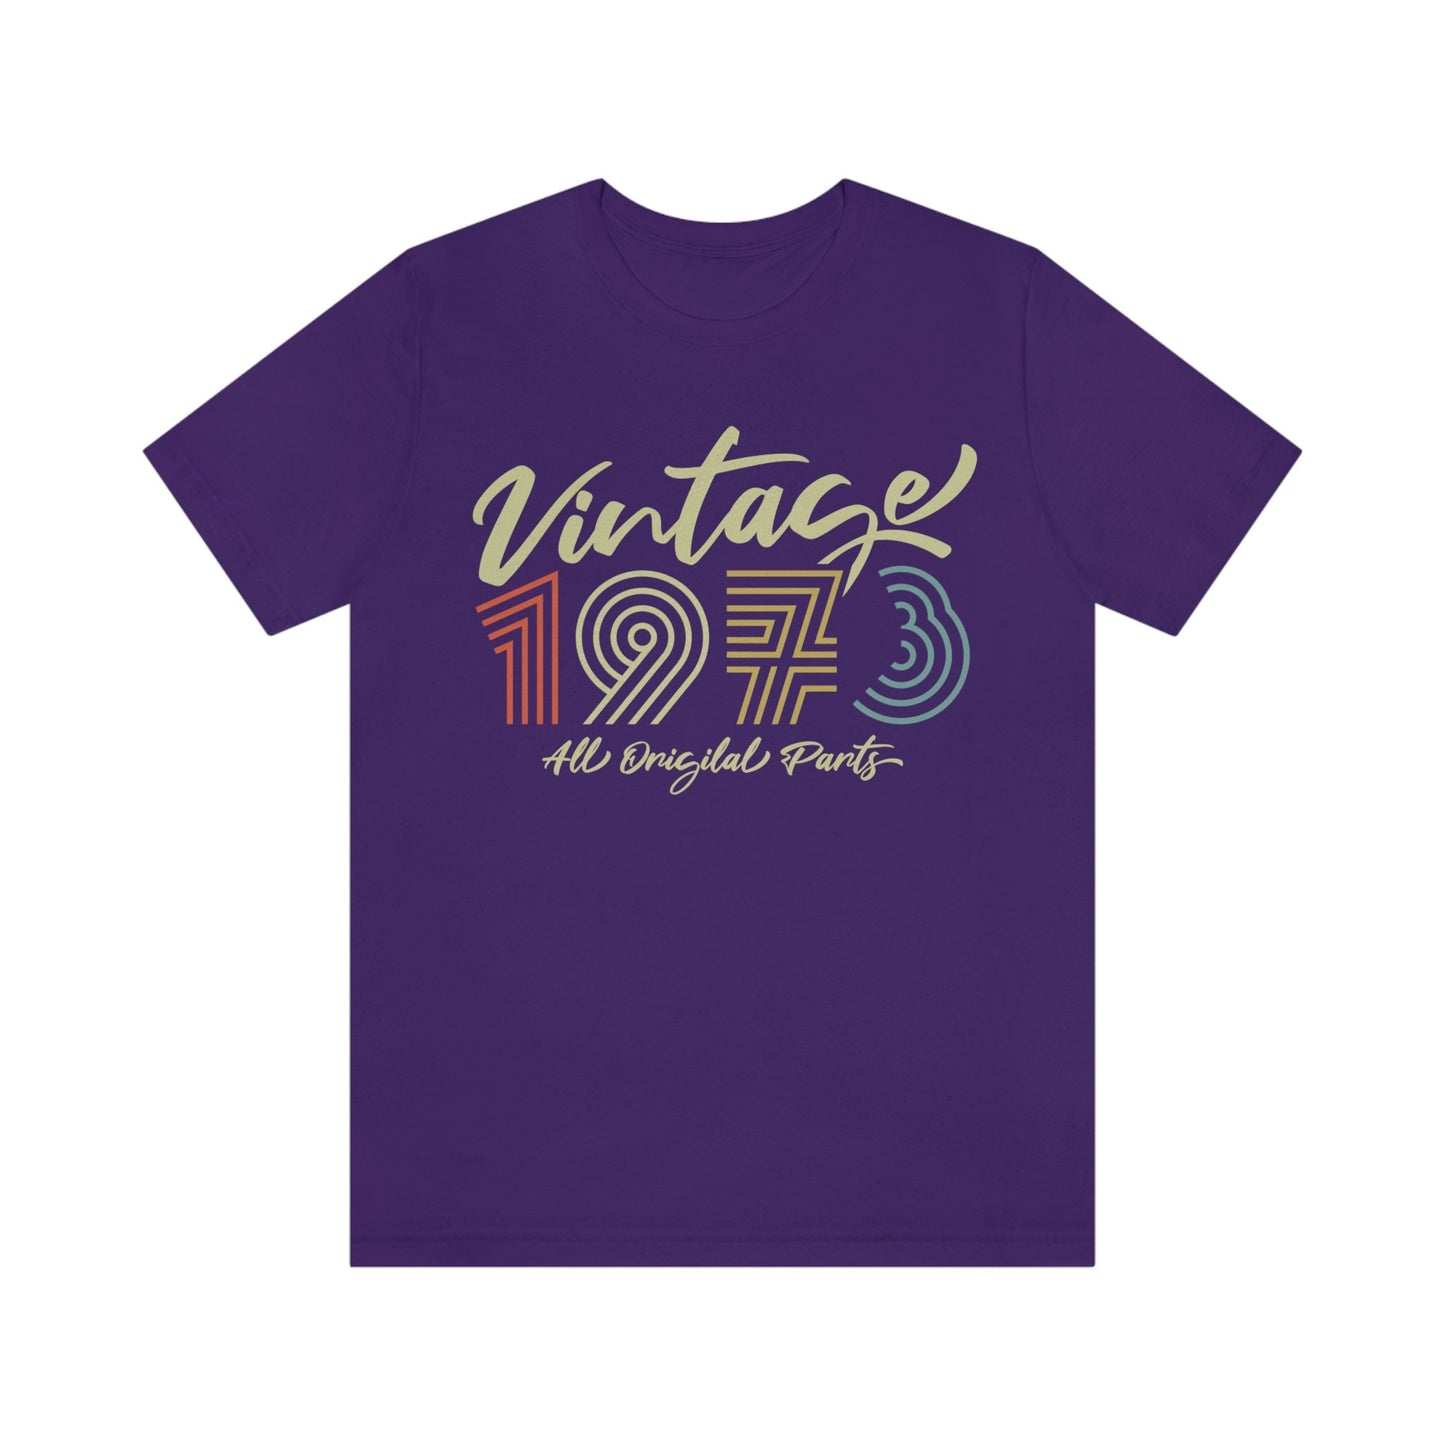 Vintage 1973 Birthday shirt for Women or Men, Retro 1973 gift shirt for wife or husband